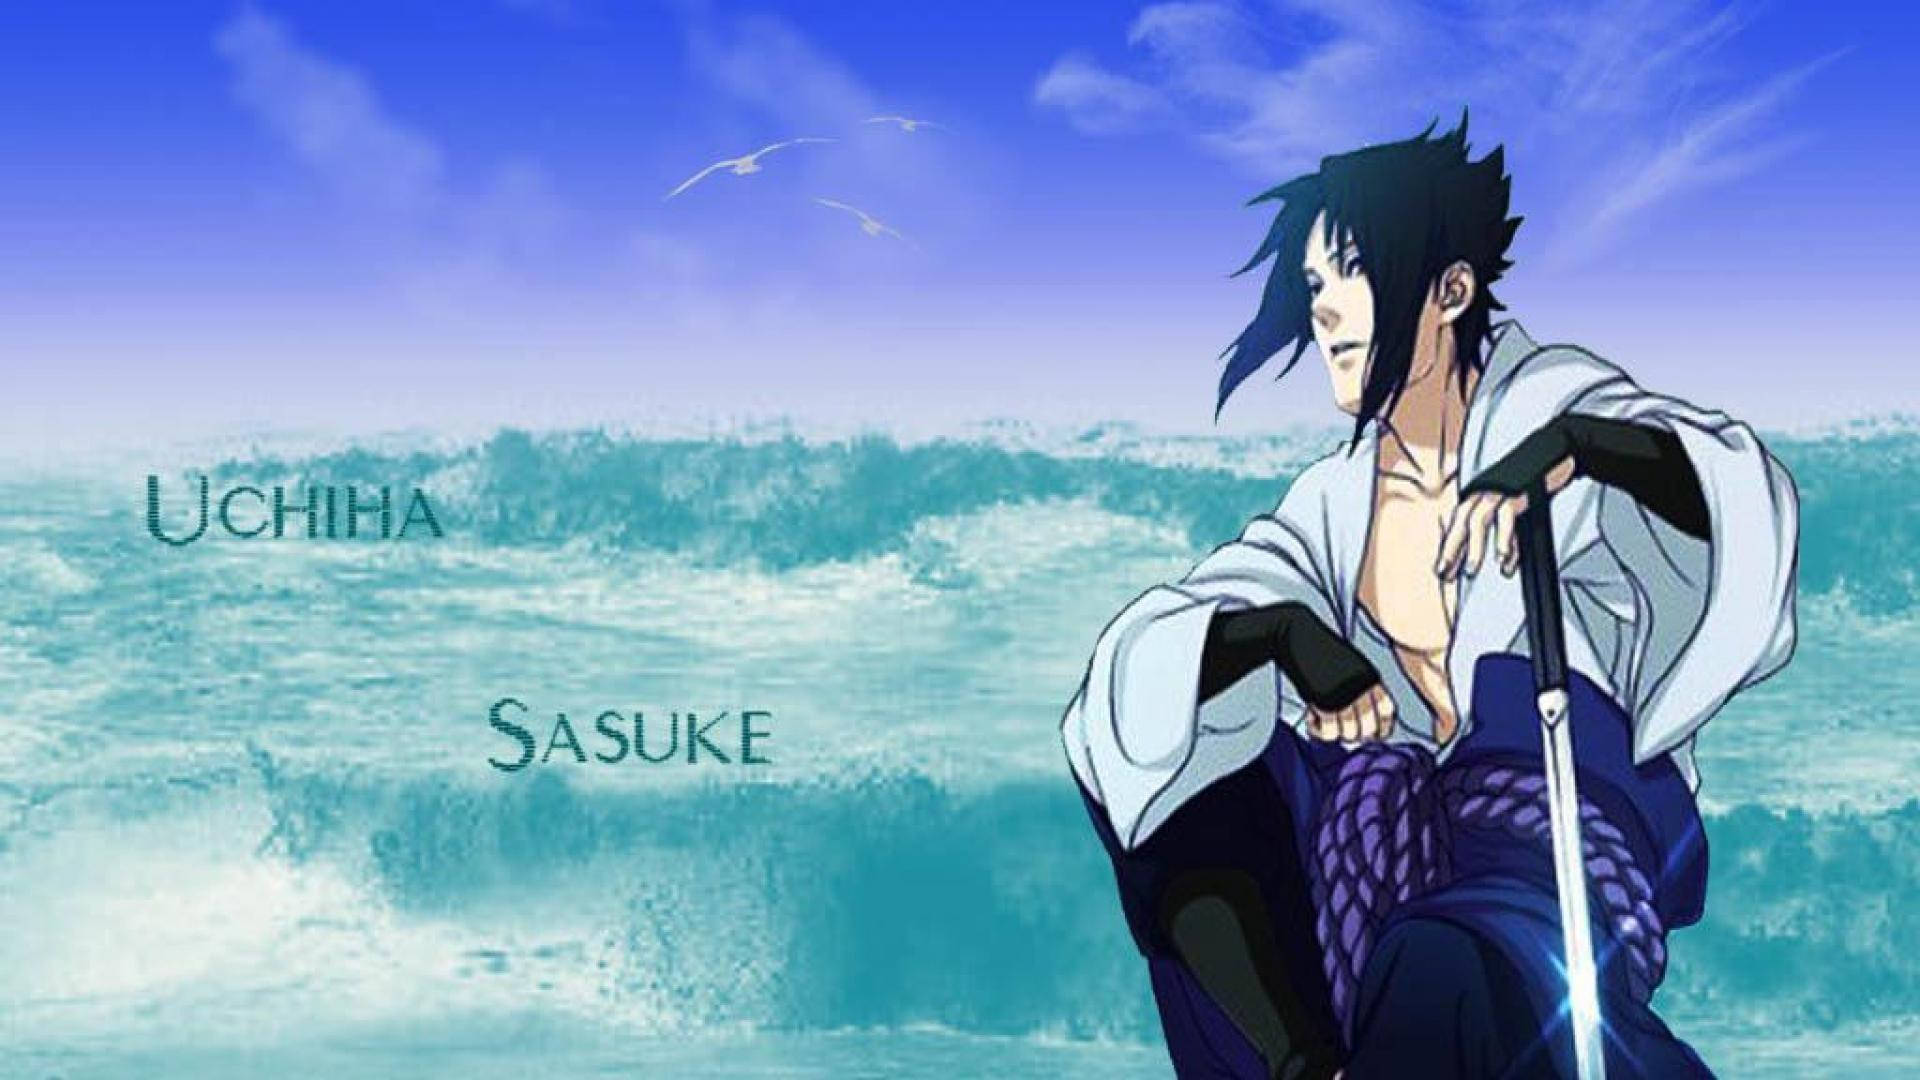 Aesthetic Sasuke Against Ocean Waves